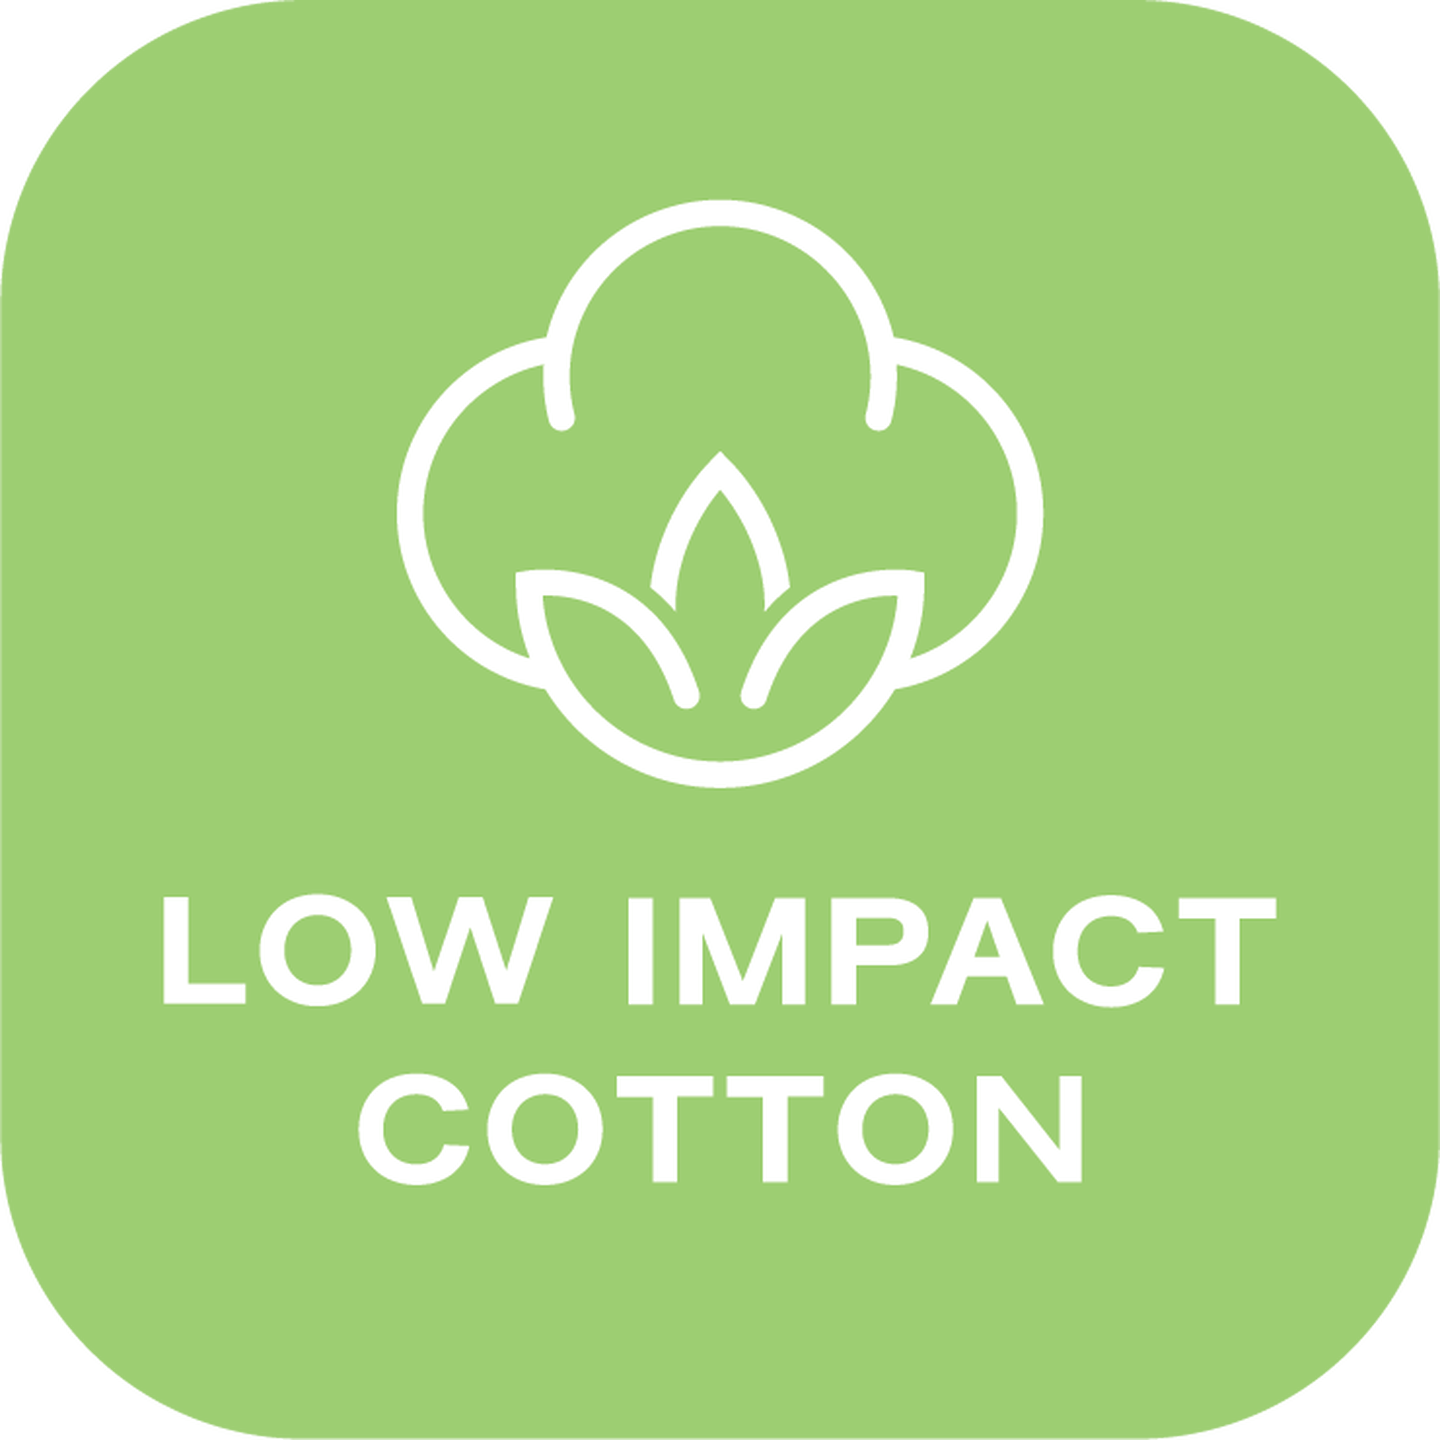 Low Impact Cotton